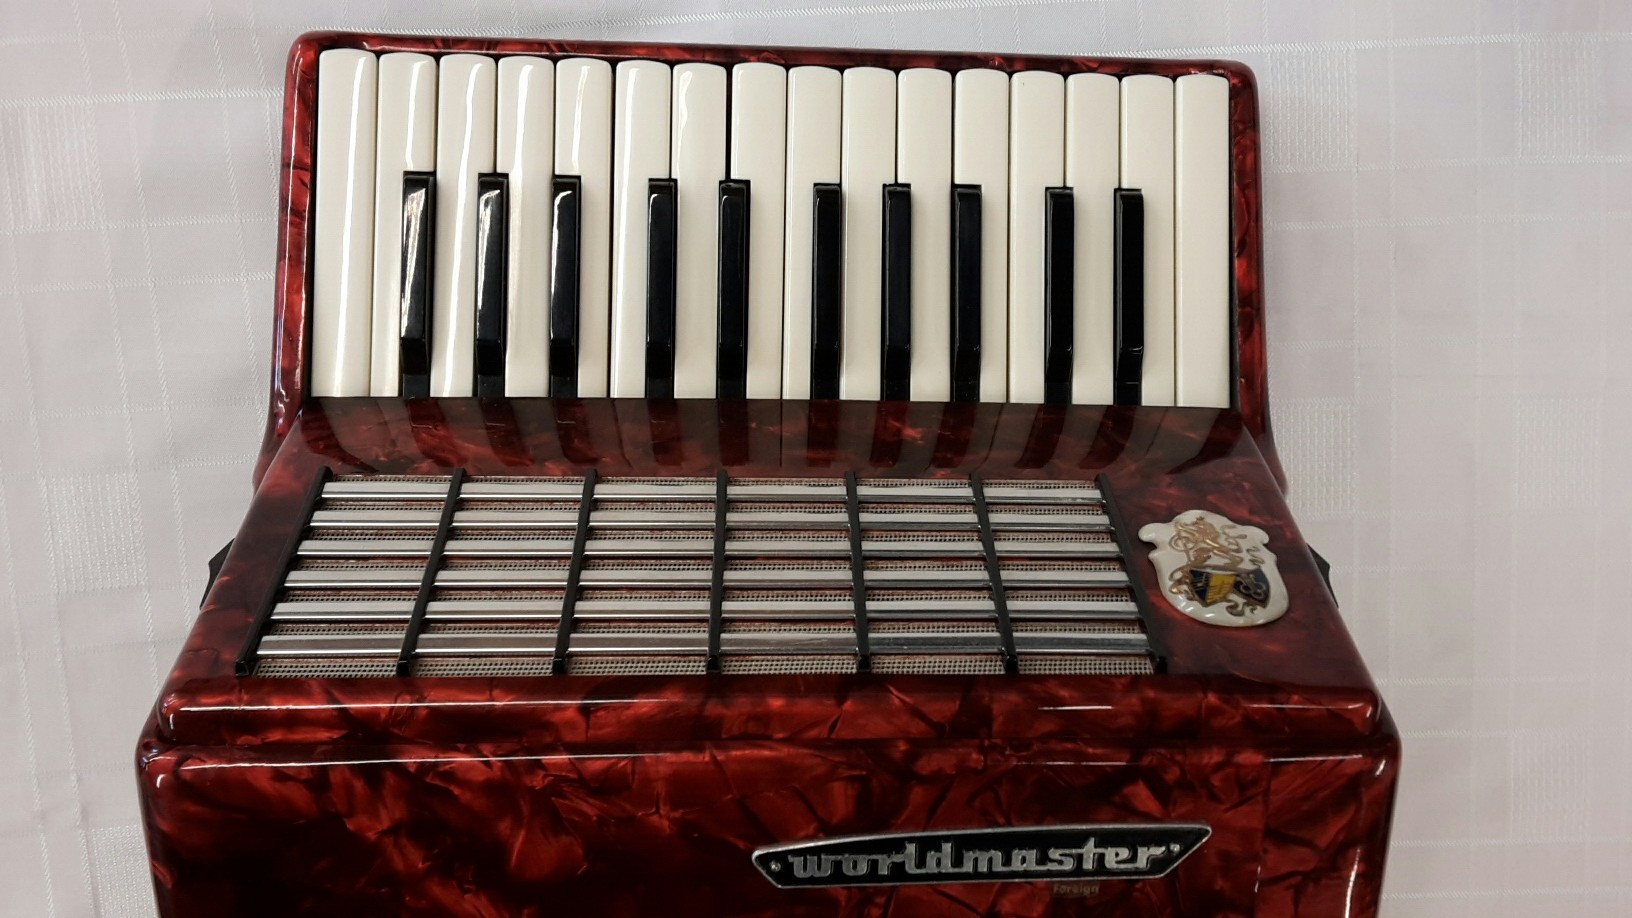 accordeon bandmaster